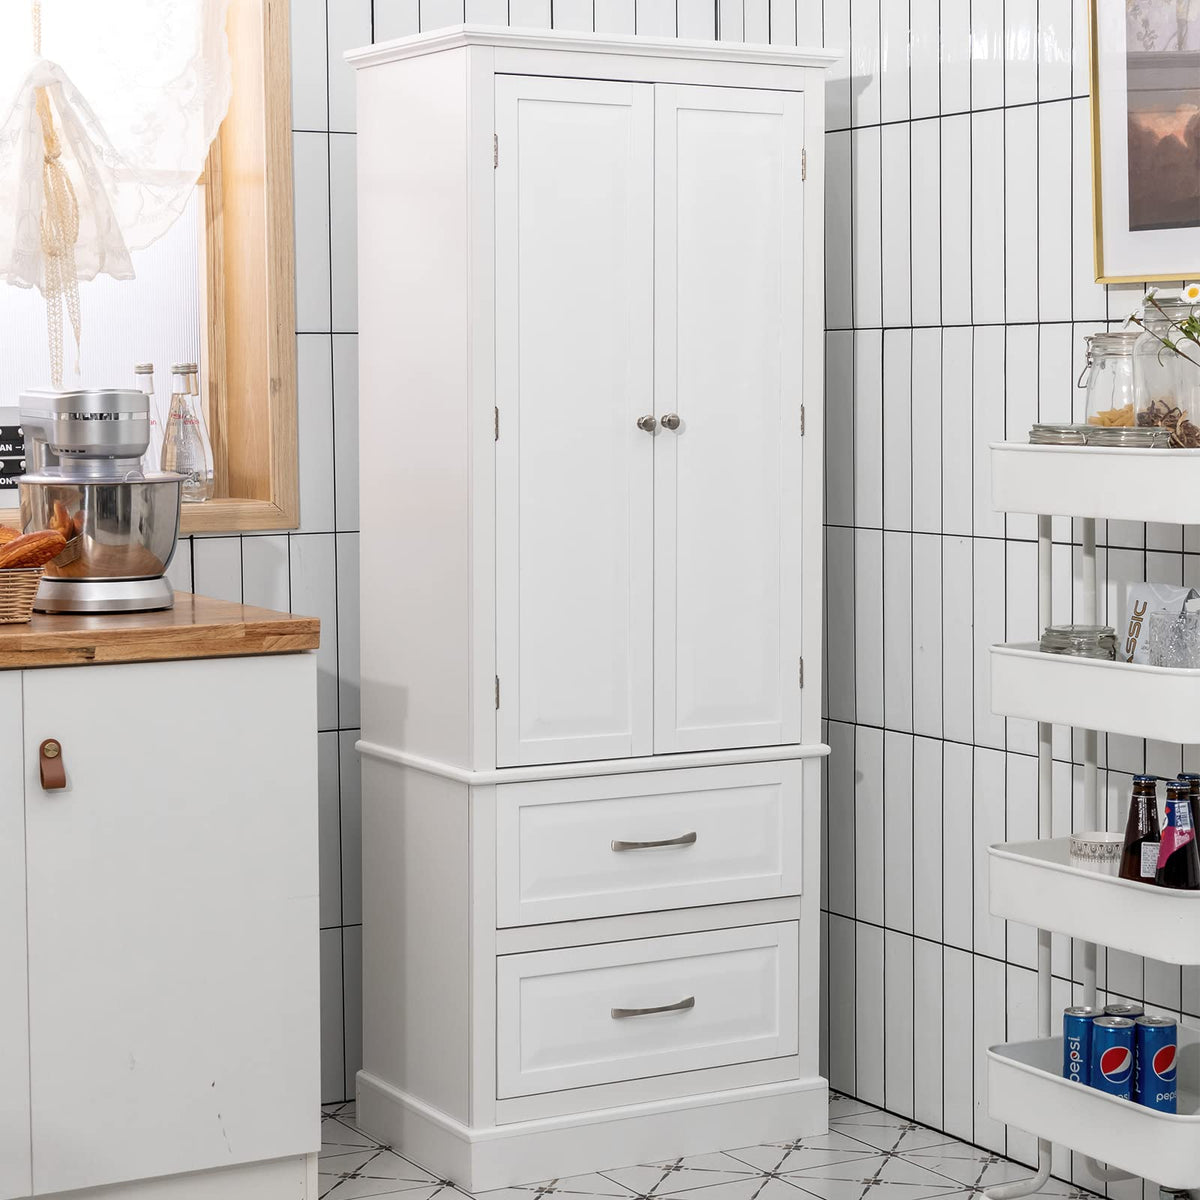 Giantex Bathroom Storage Cabinet with Drawers - 4 Drawer Storage Organizer  w/Cupboard, Adjustable Shelf, Anti-Toppling Device, Entryway Storage Unit